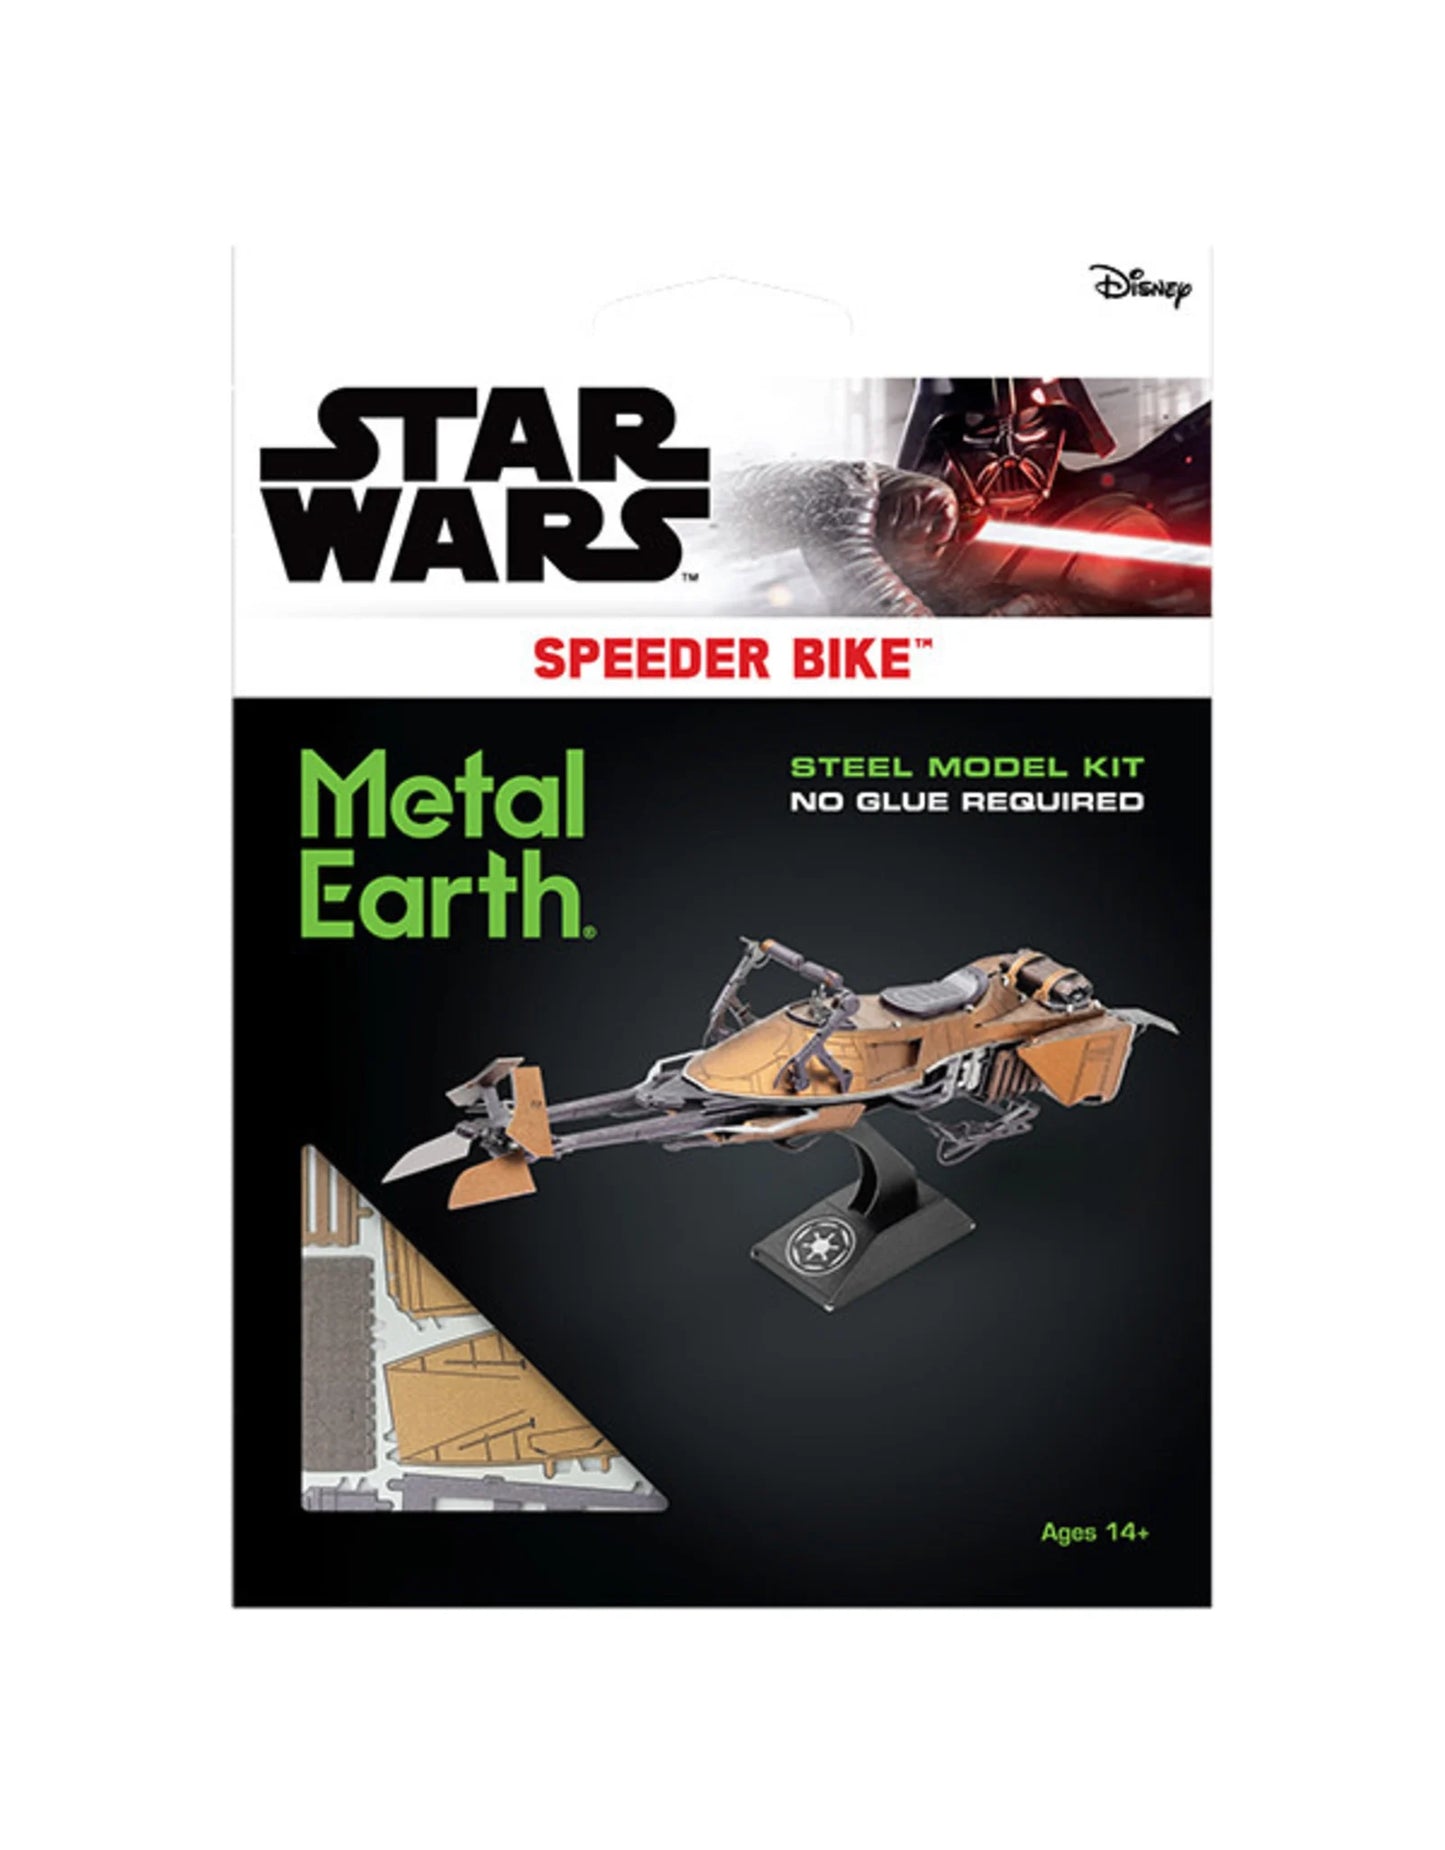 Star Wars Speeder Bike Metal Earth